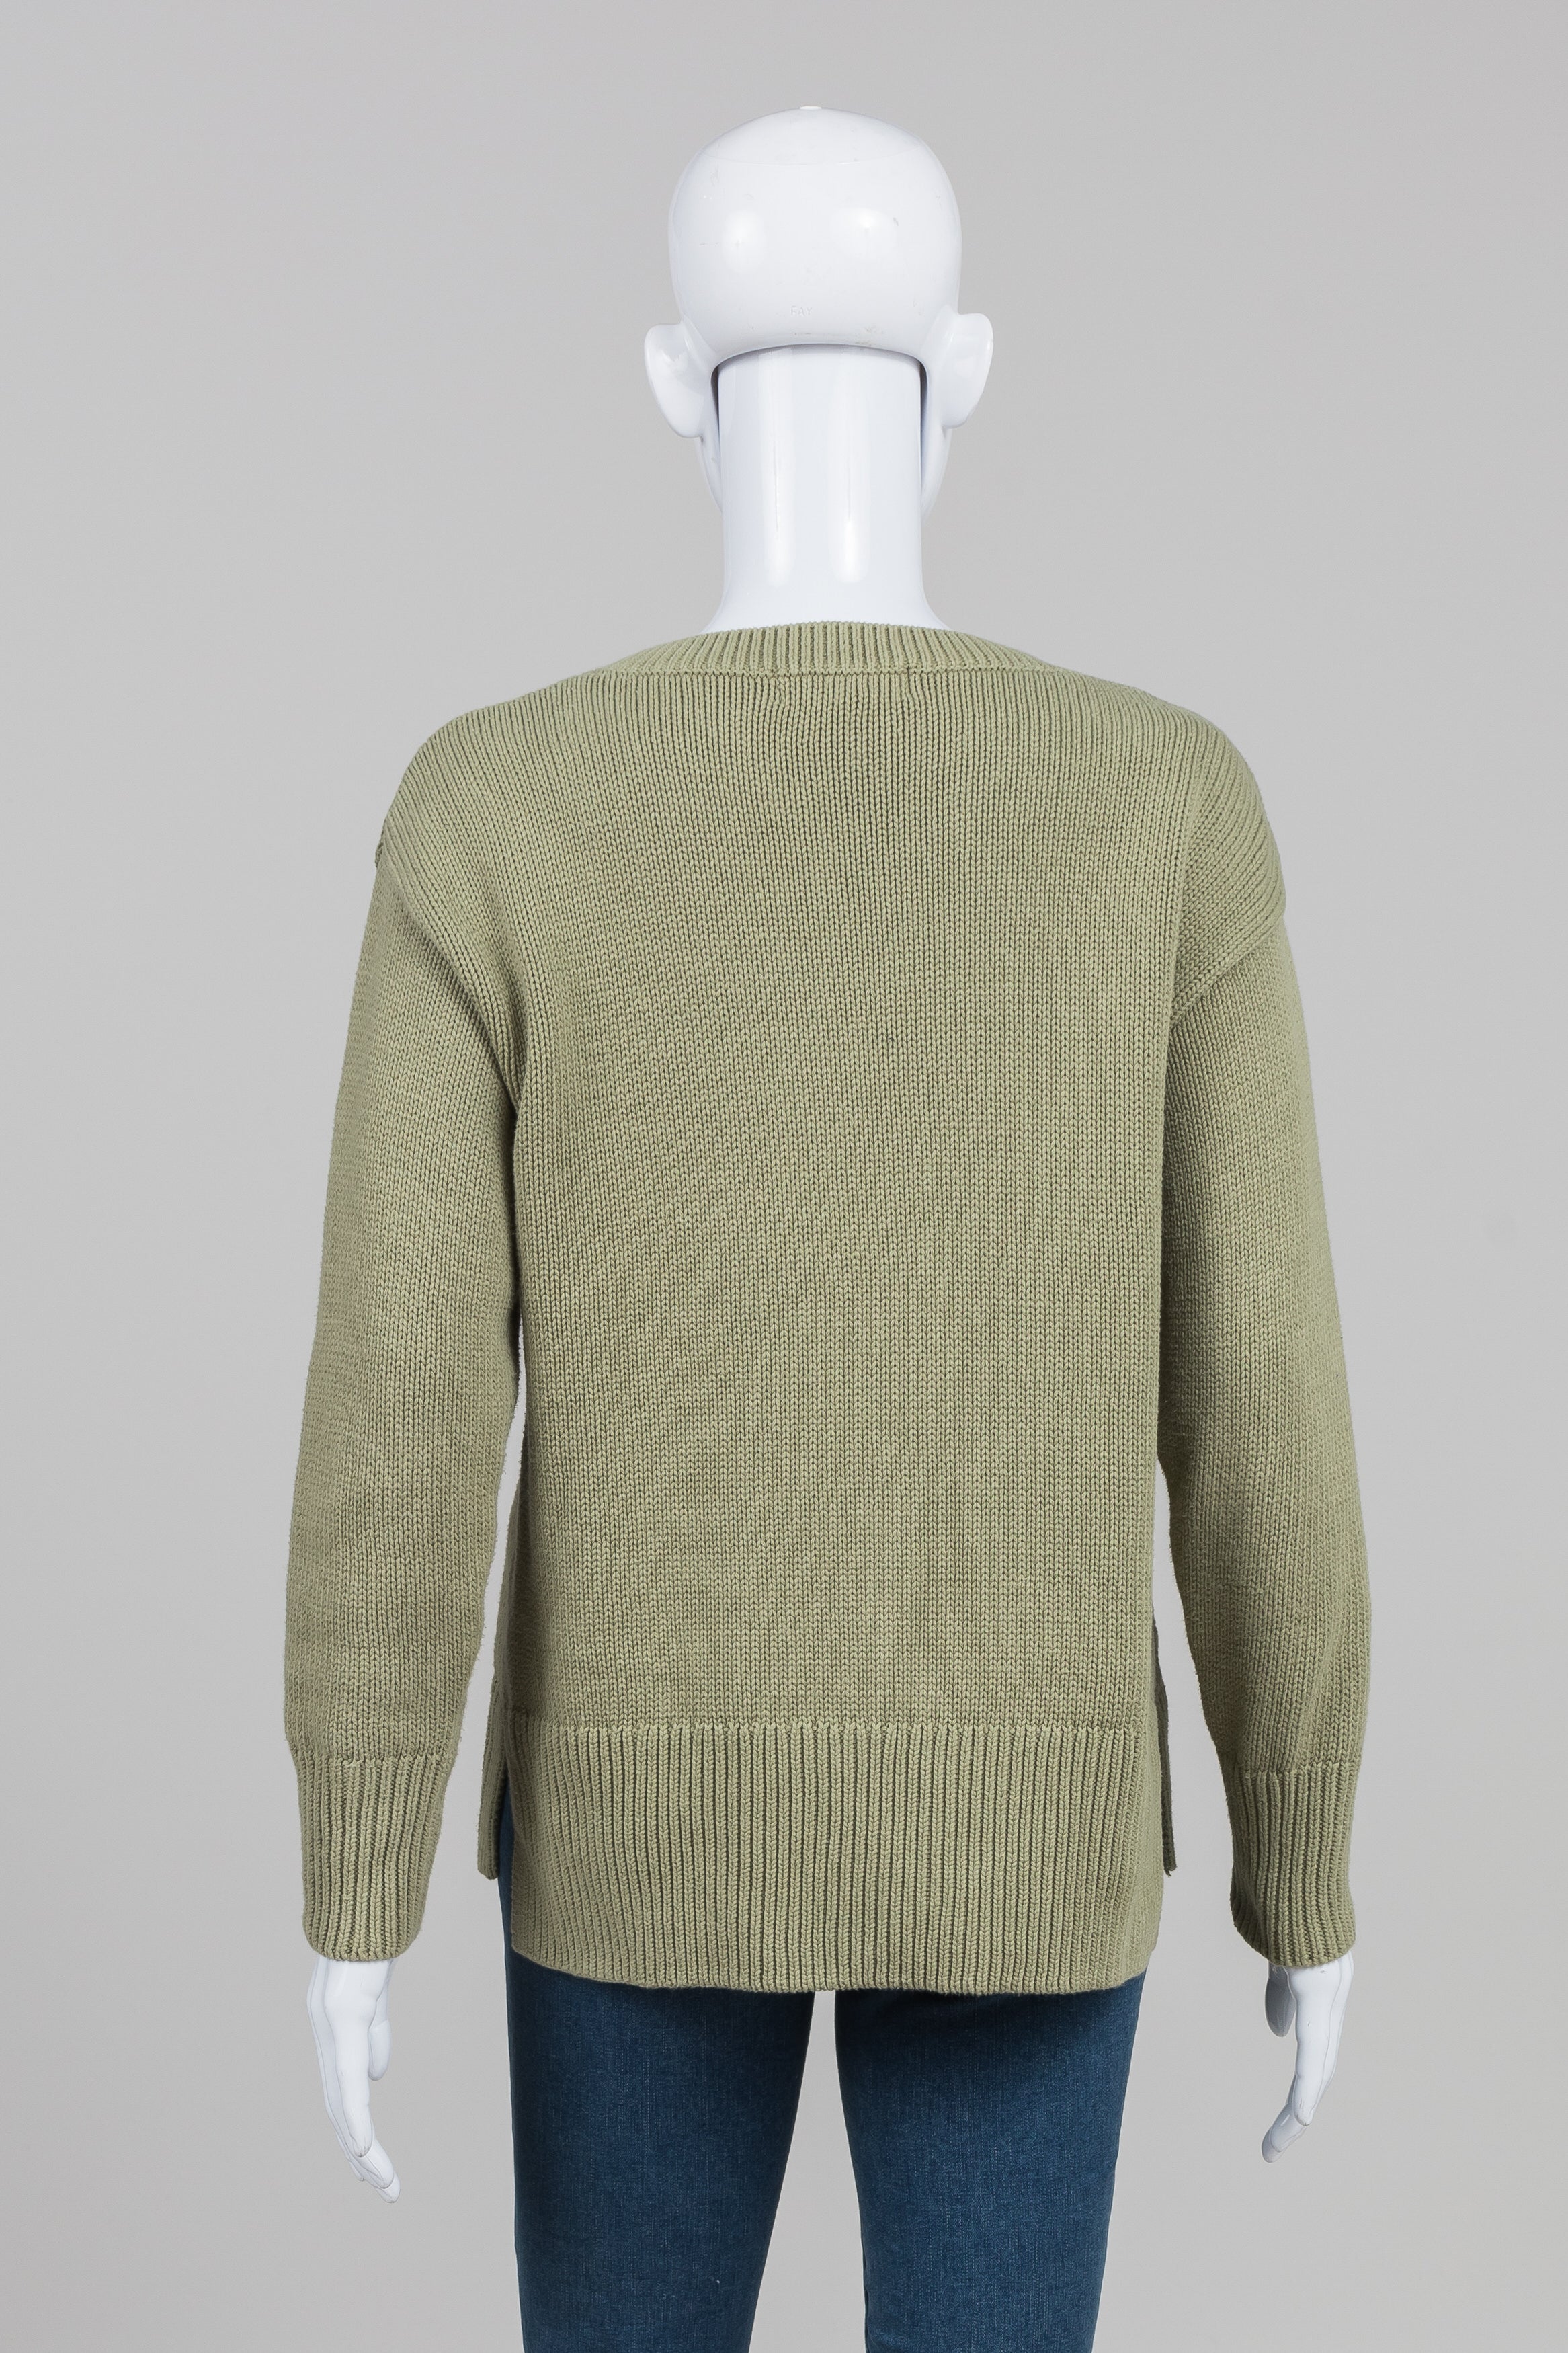 Philosophy Green Cotton Sweater (S)